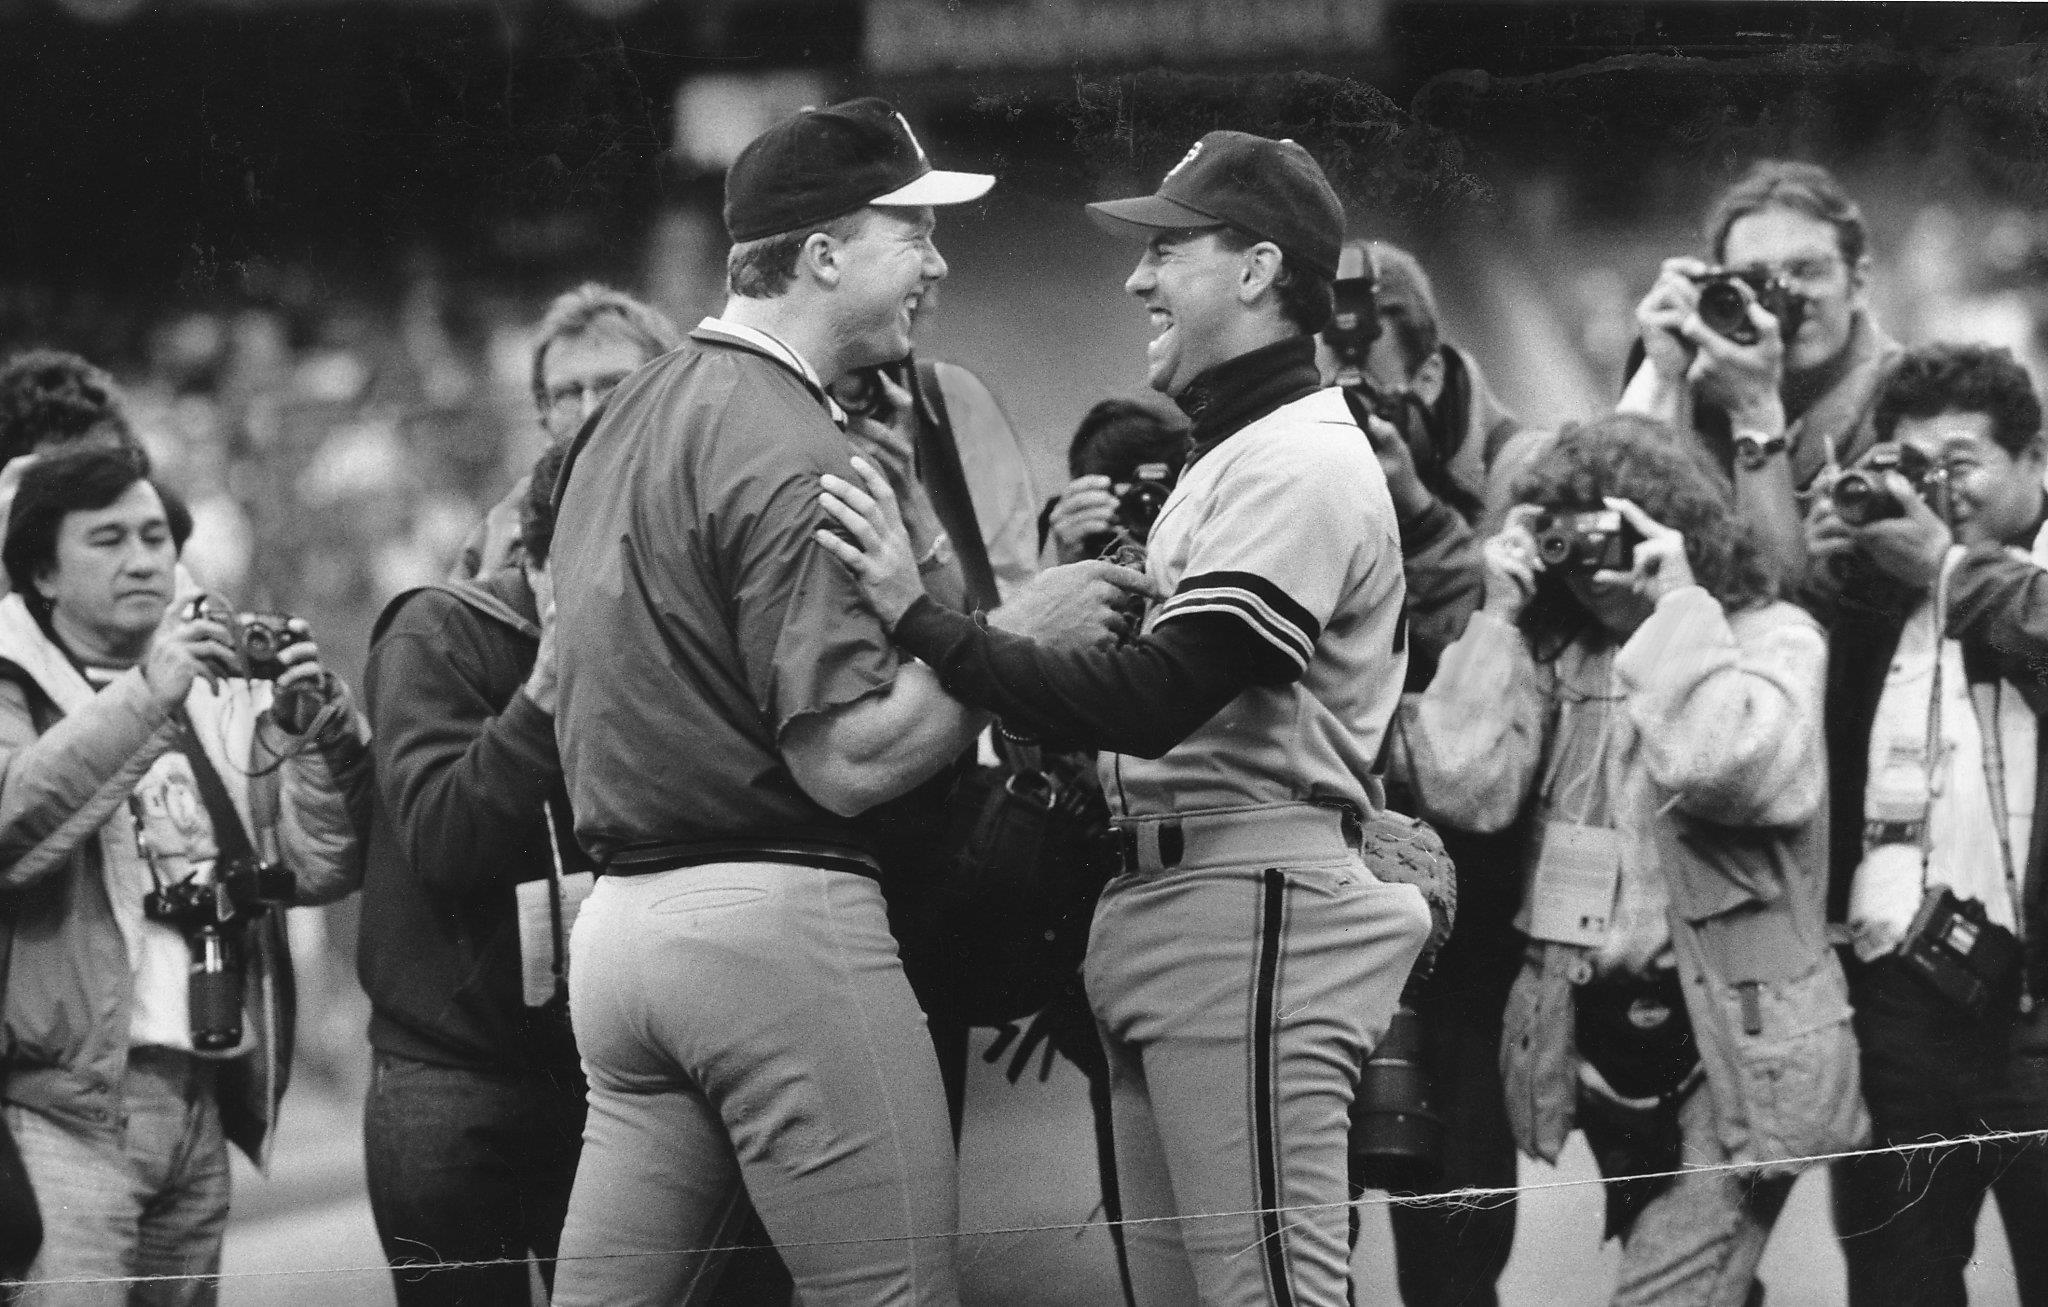 1989 World Series photos found: Giants, A's and a quake's shake